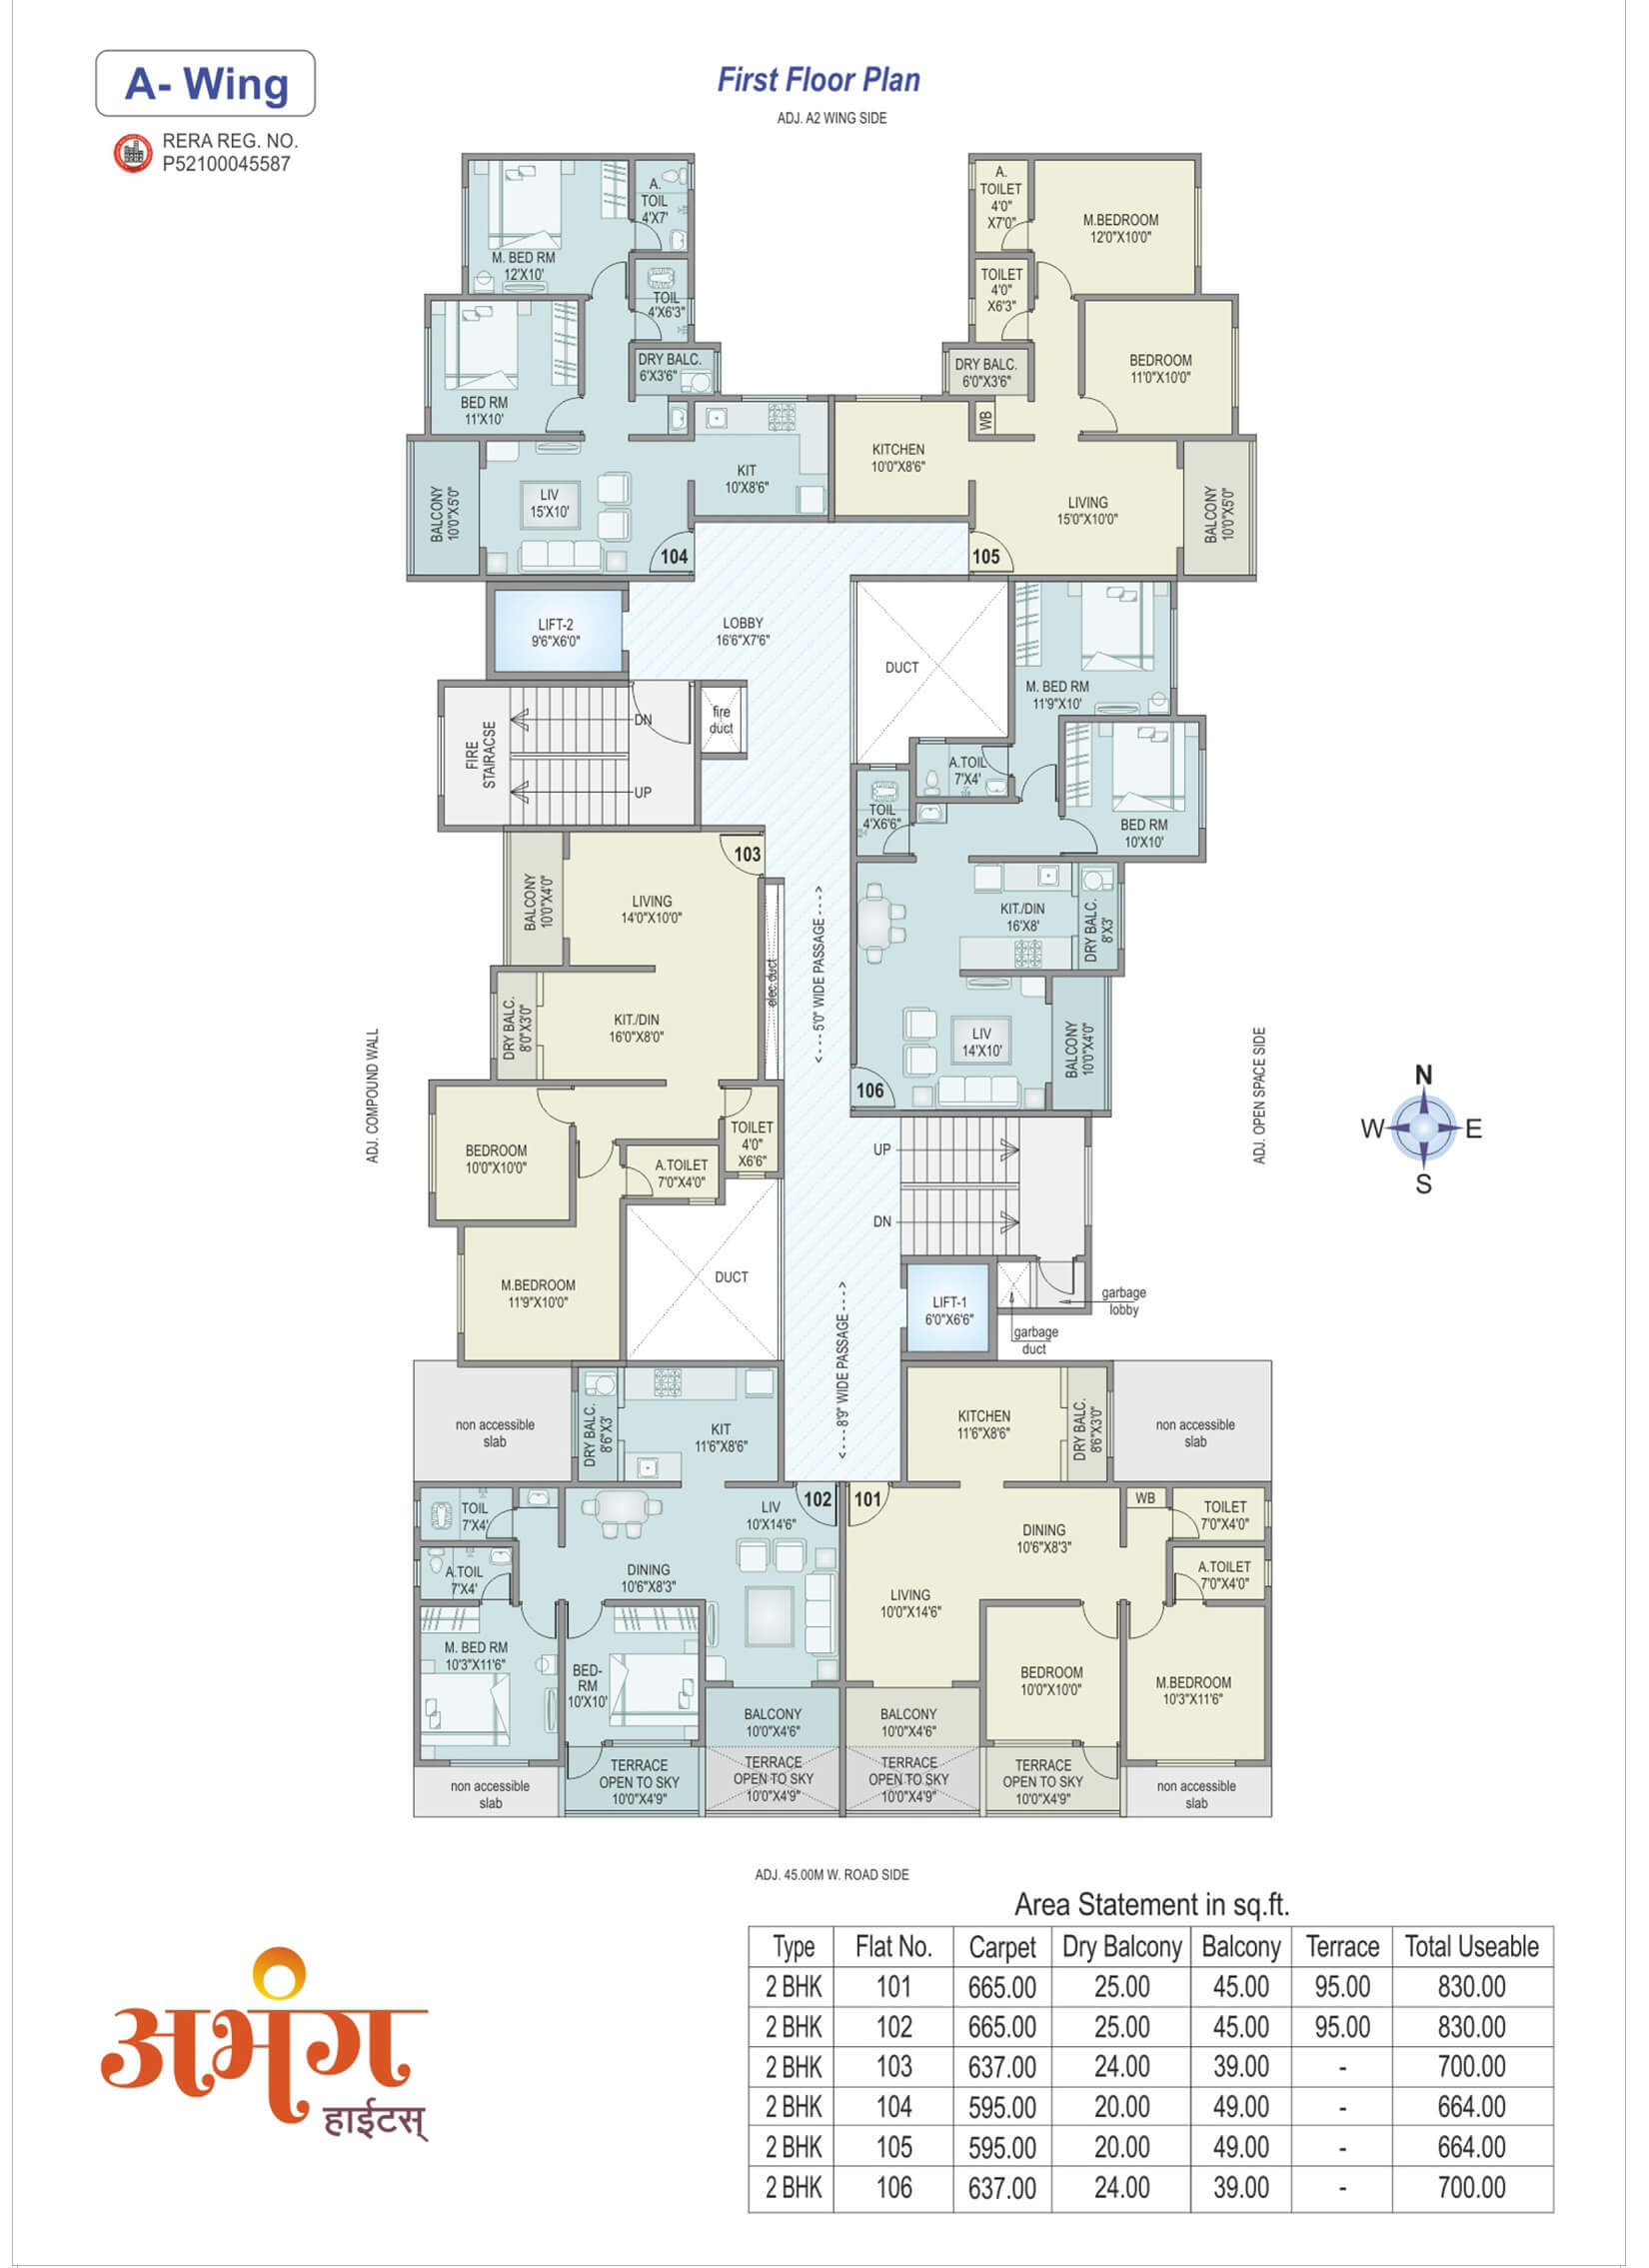 Abhang Heights - First Floor Plan